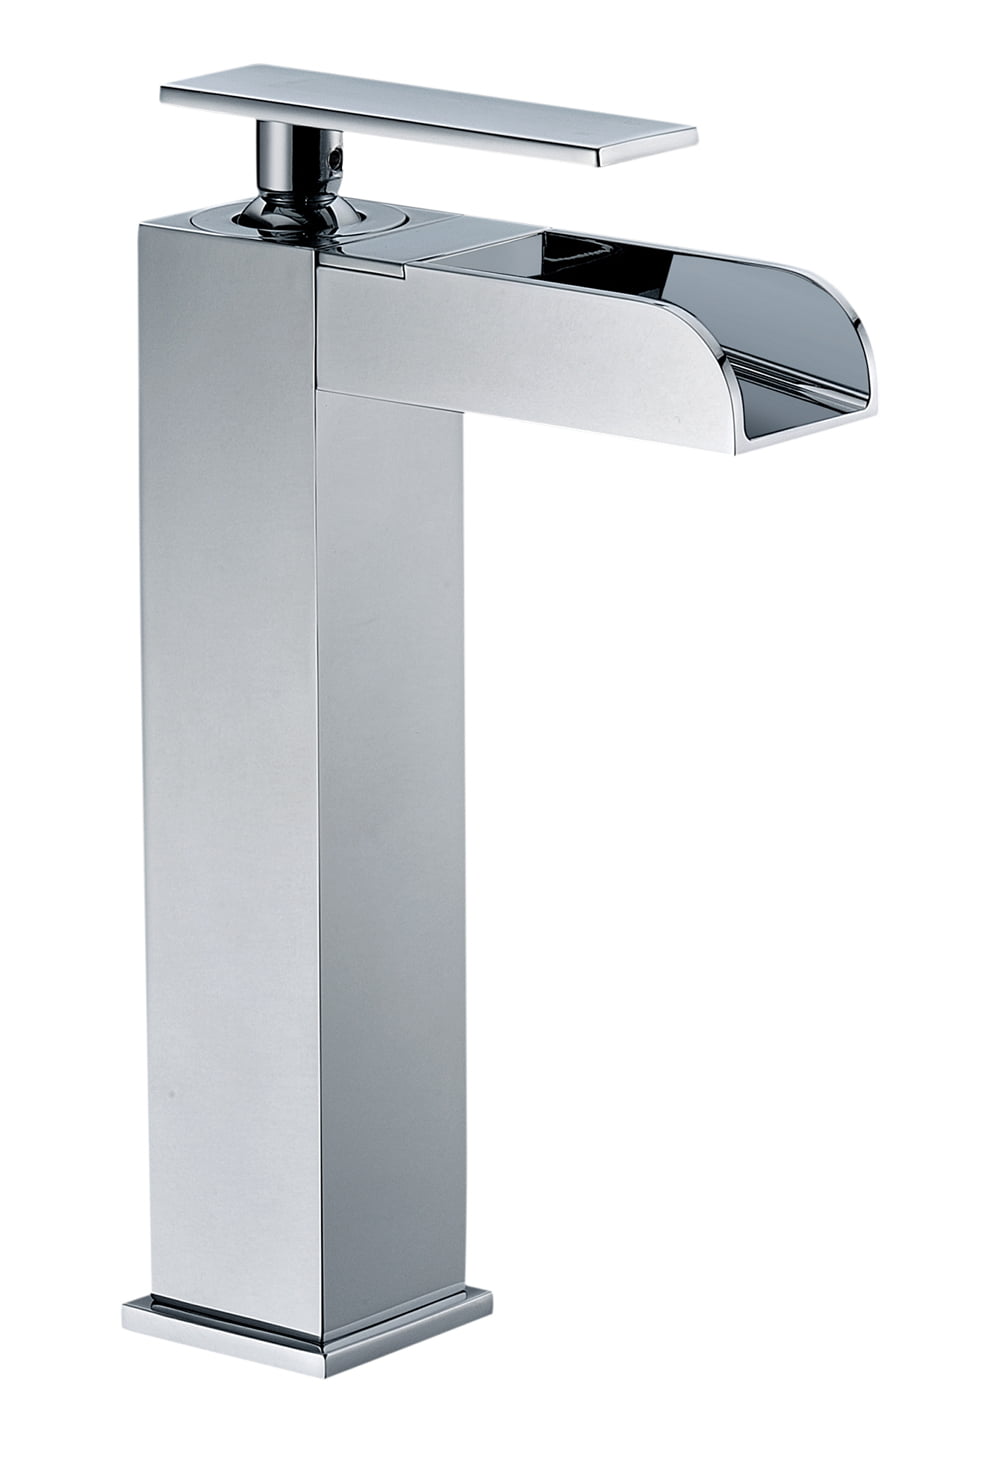 Picture of ALFI Brand AB1597-PC Polished Chrome Single Hole Tall Waterfall Bathroom Faucet